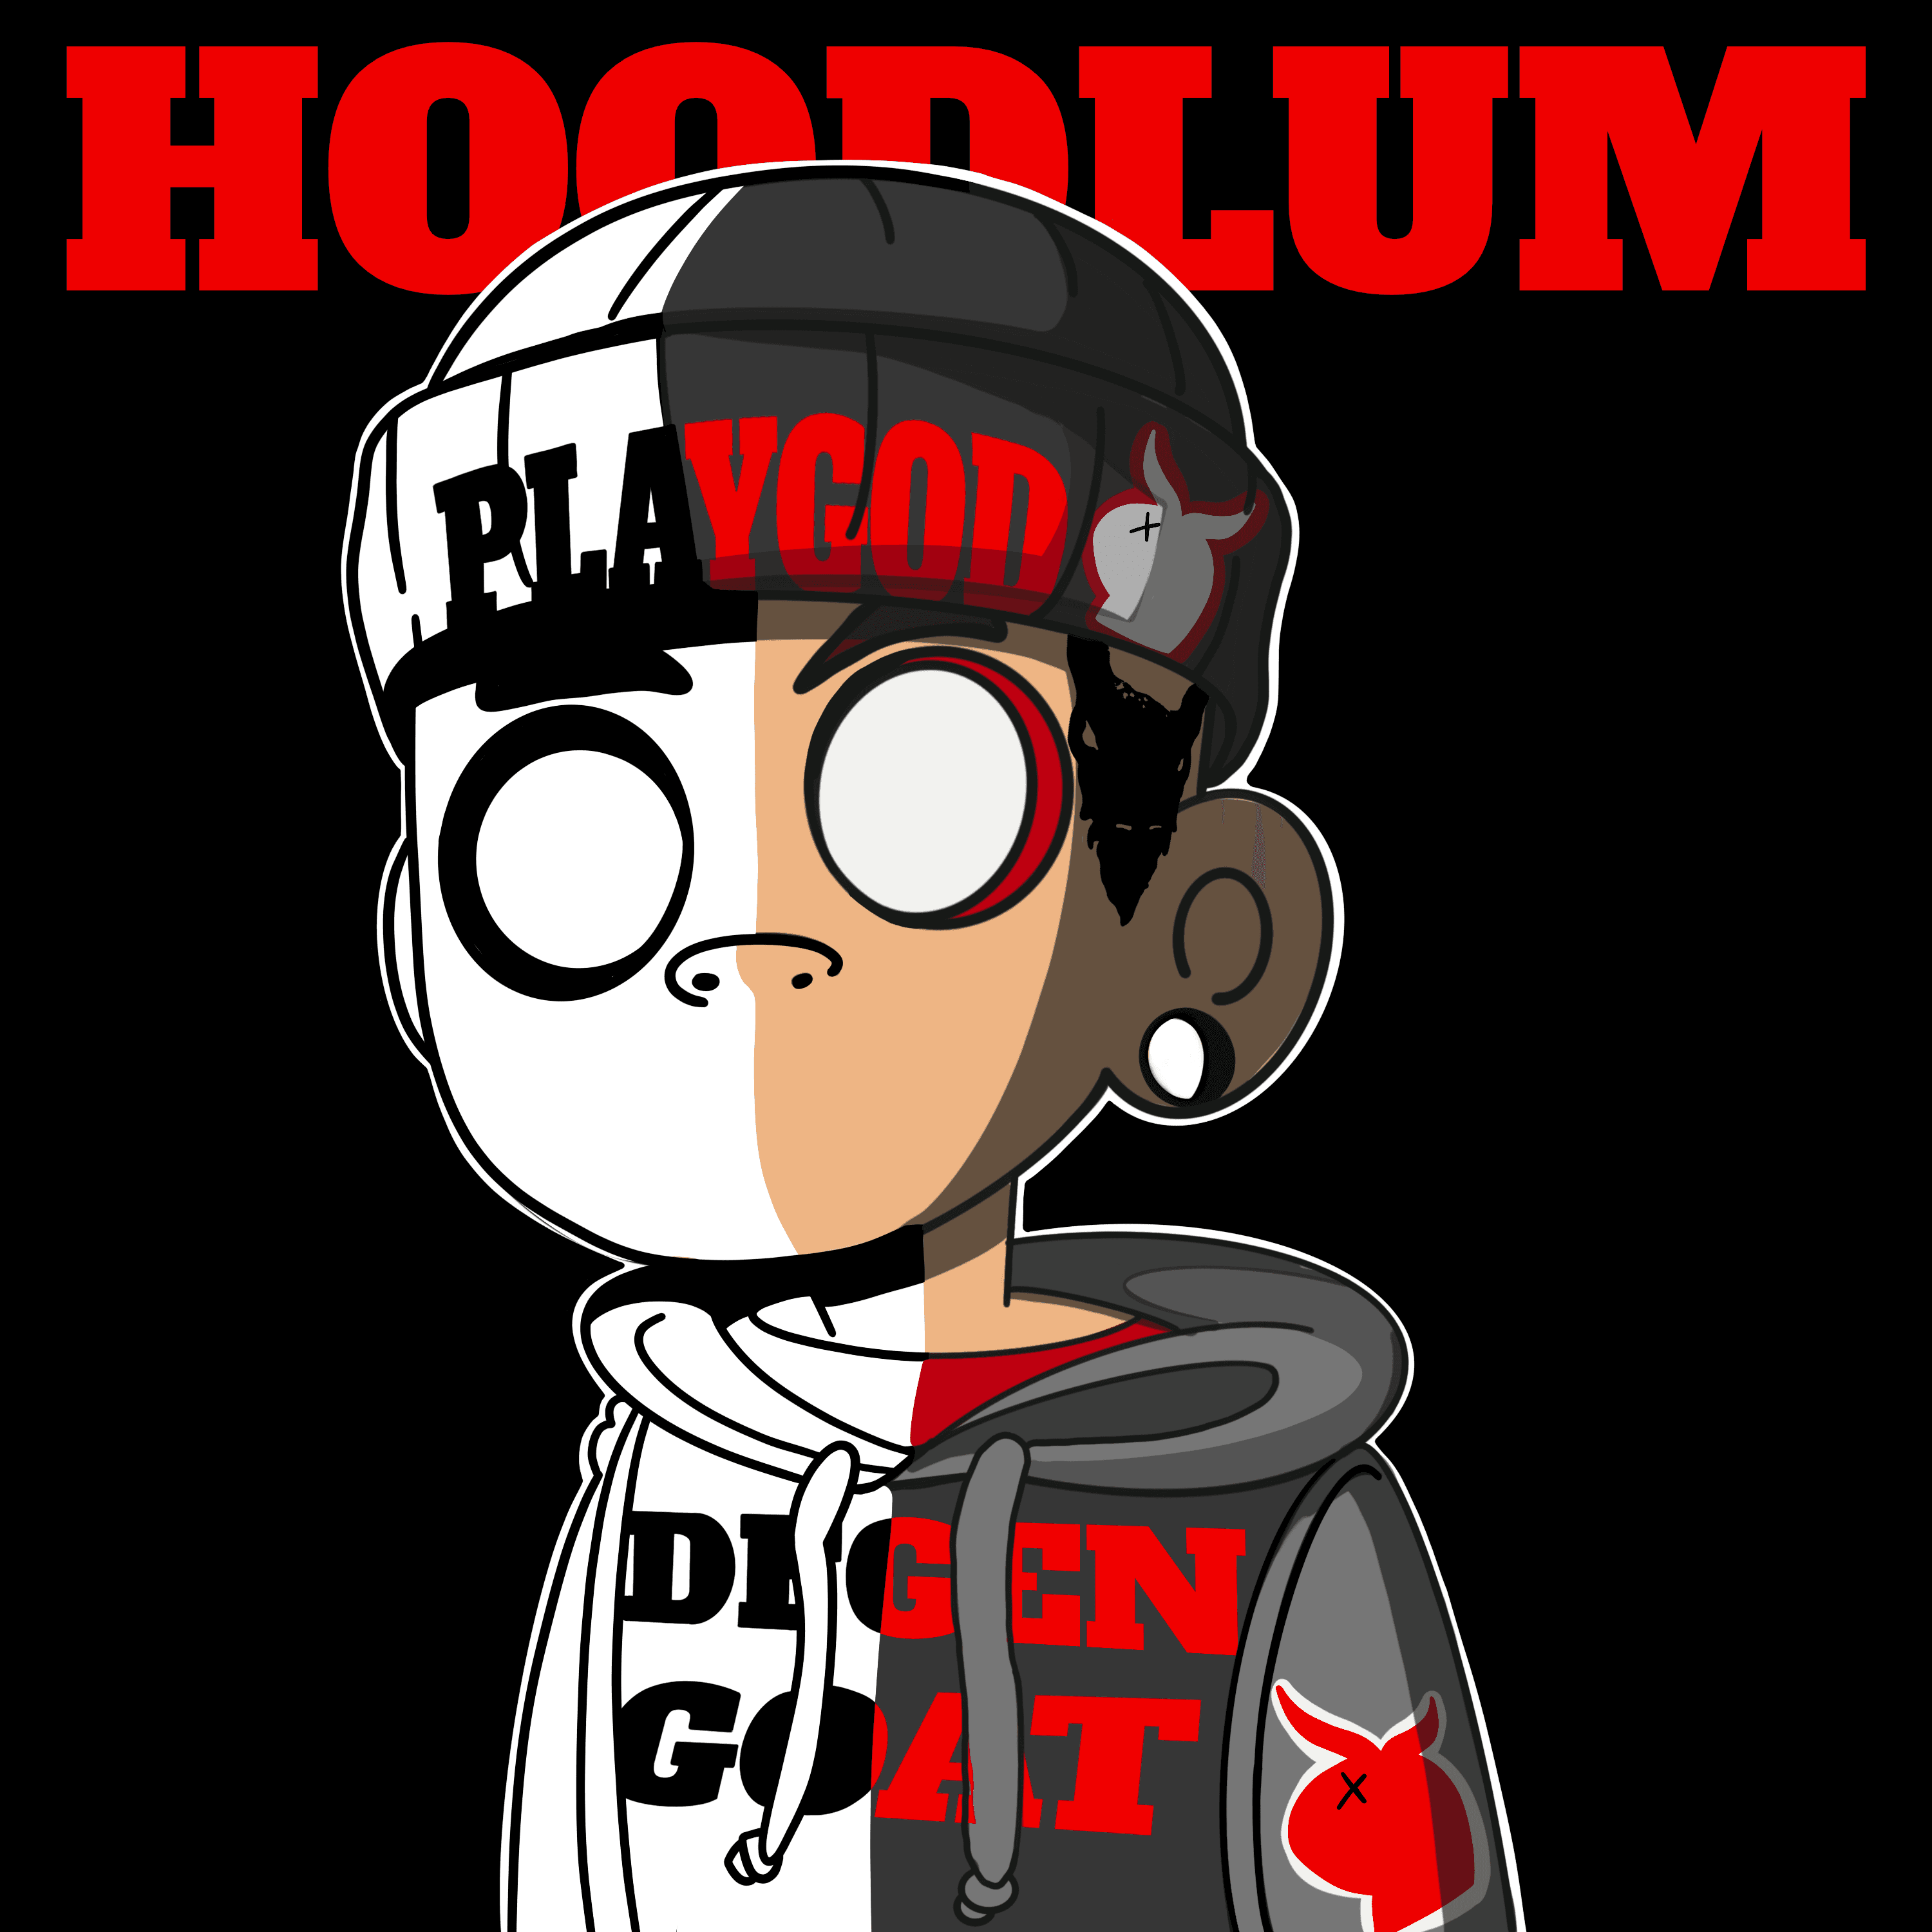 Playgod Hoodlum